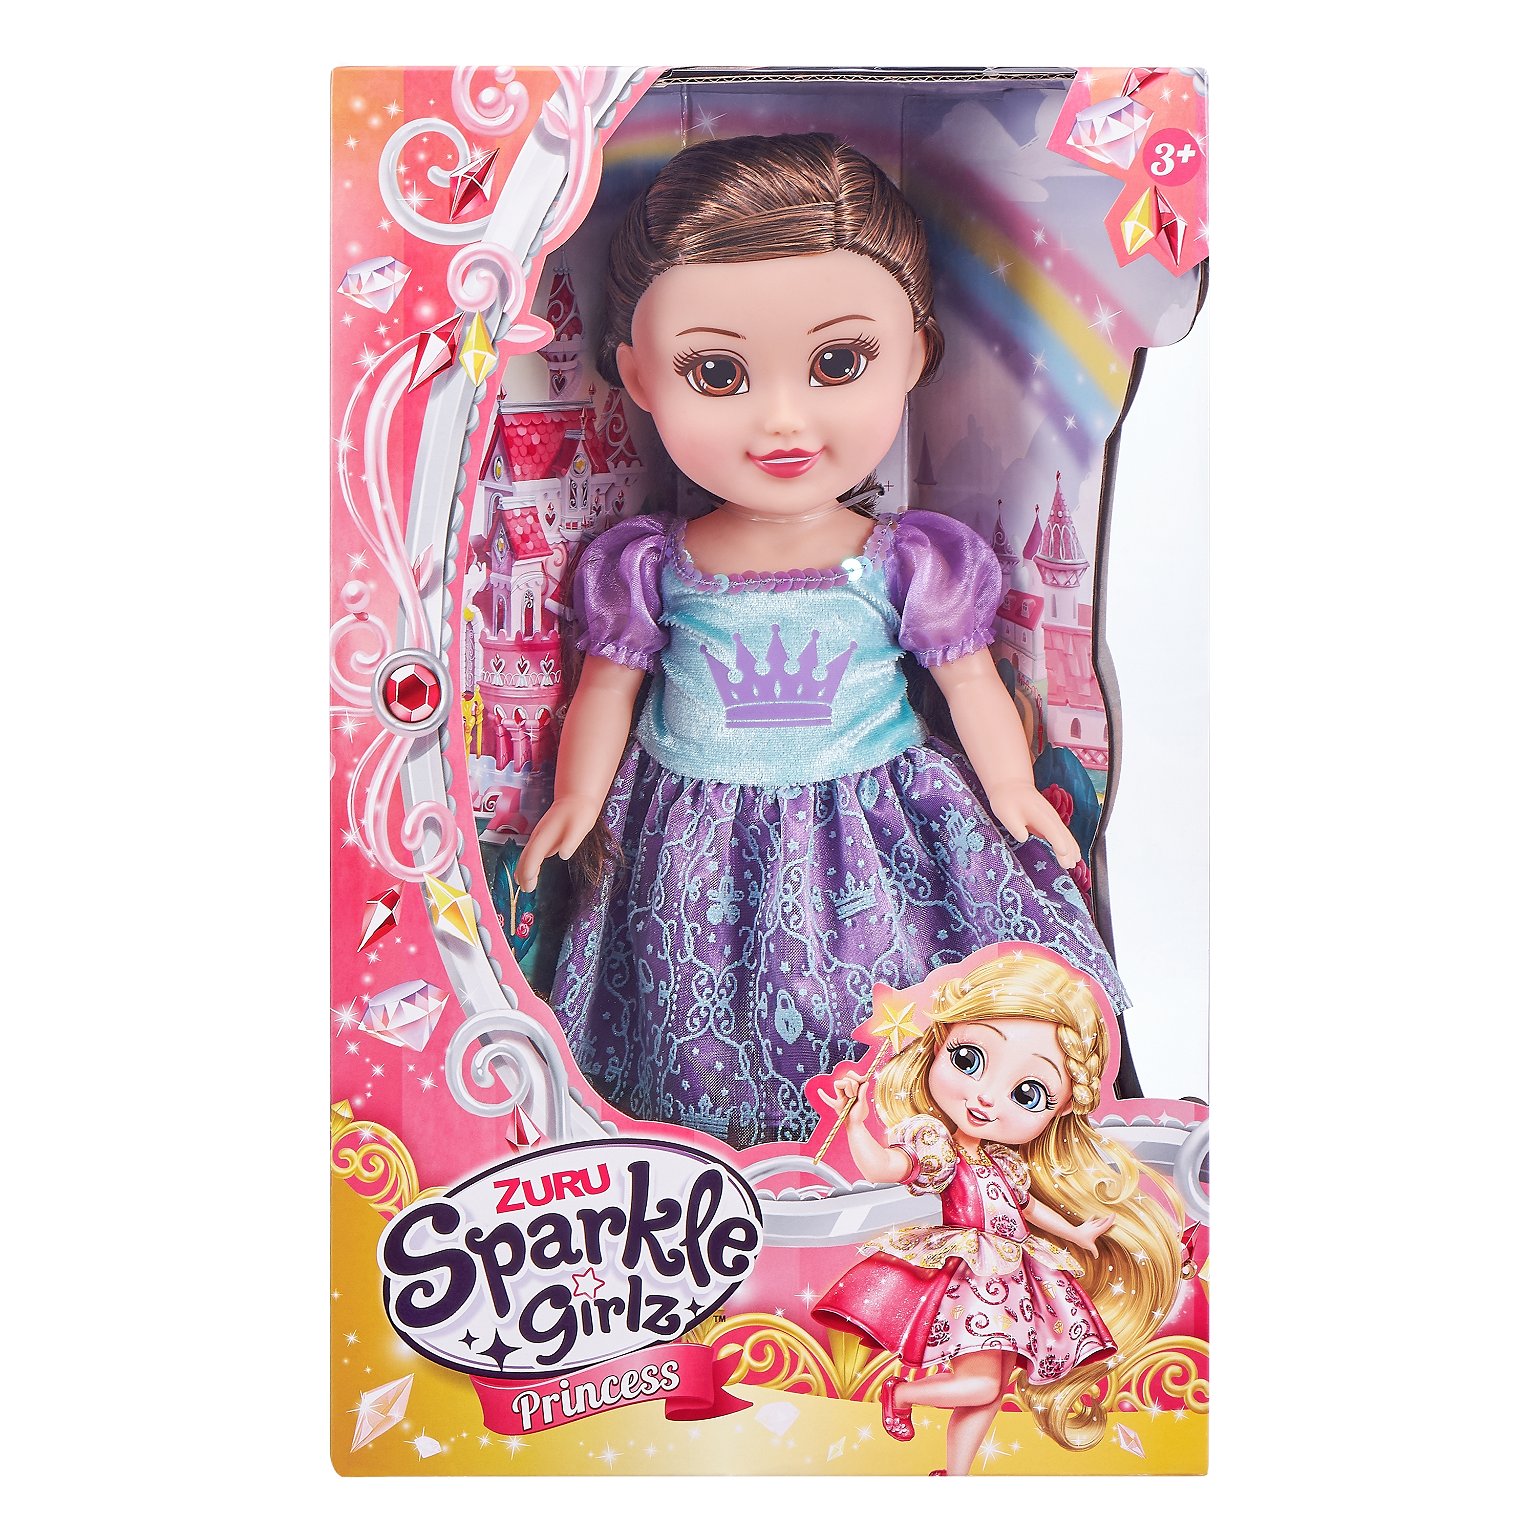 SPARKLE GIRLZ lėlė Sparkle Tots Princess, 33 cm, 10045 - 3